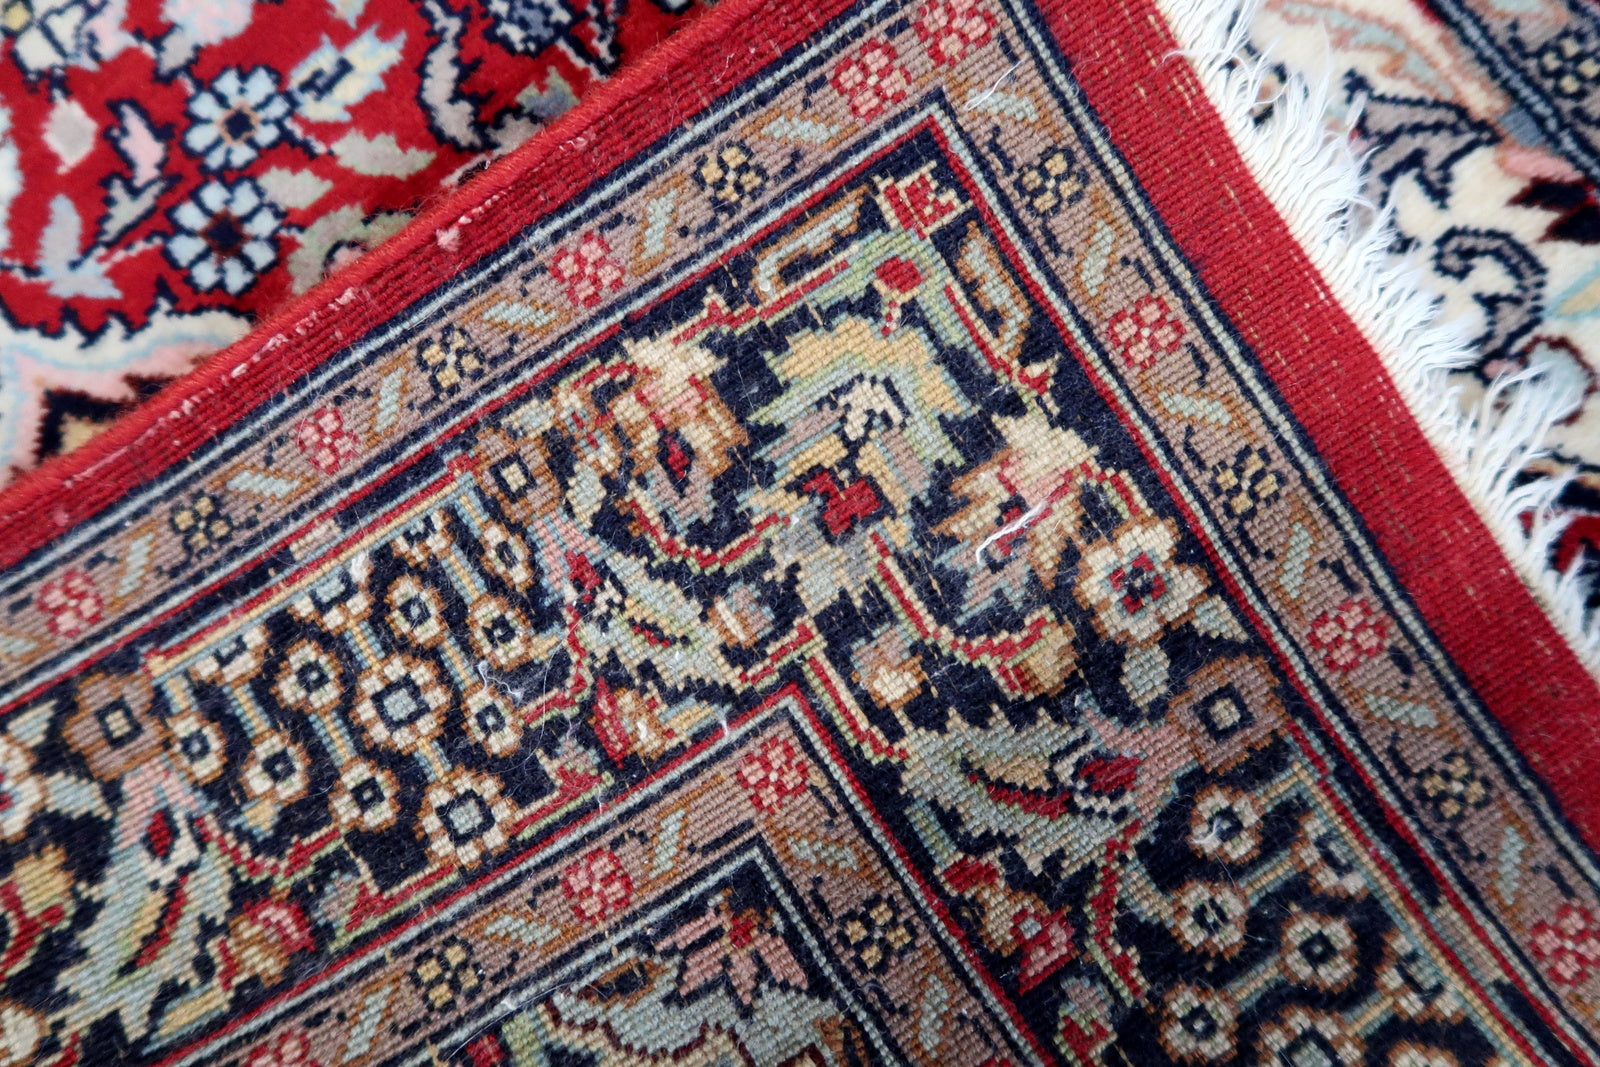 Reverse side of the Handmade Vintage Persian Kashan Runner.